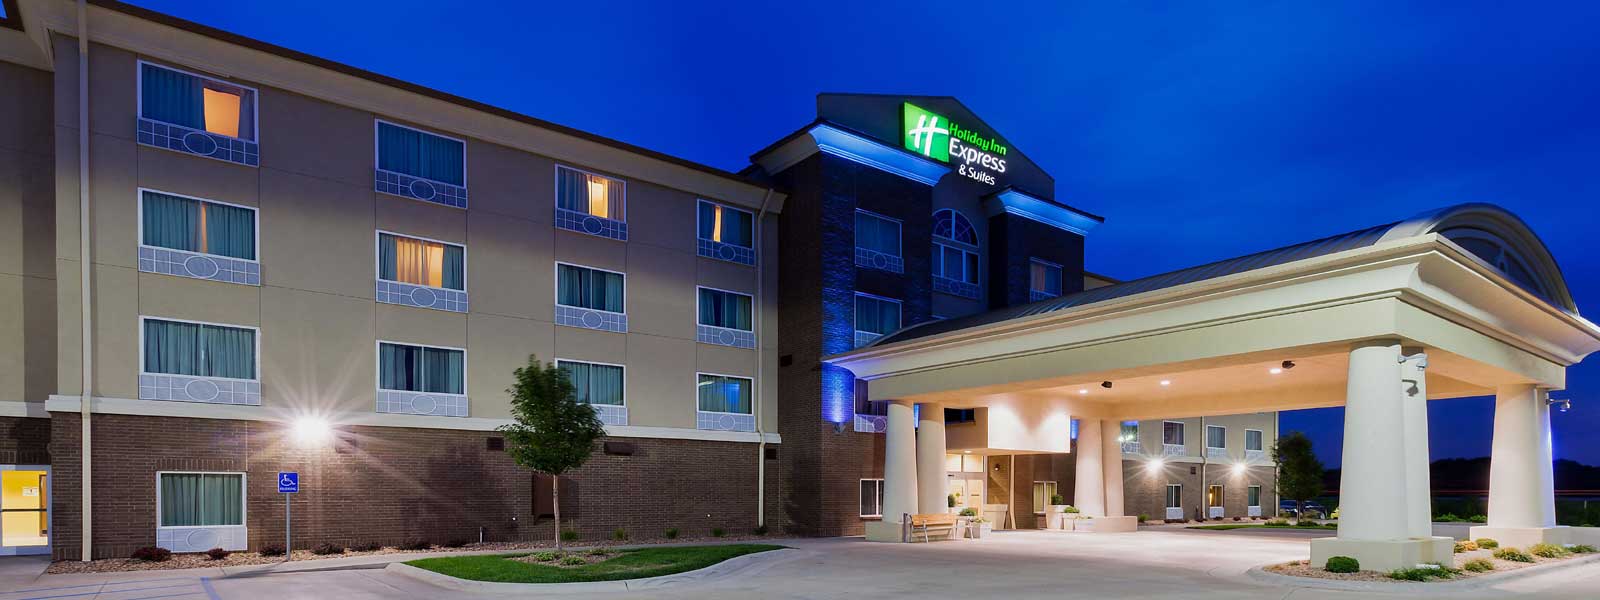 Clean Comfortable Rooms Lodging Hotels Motels in Salina Kansas